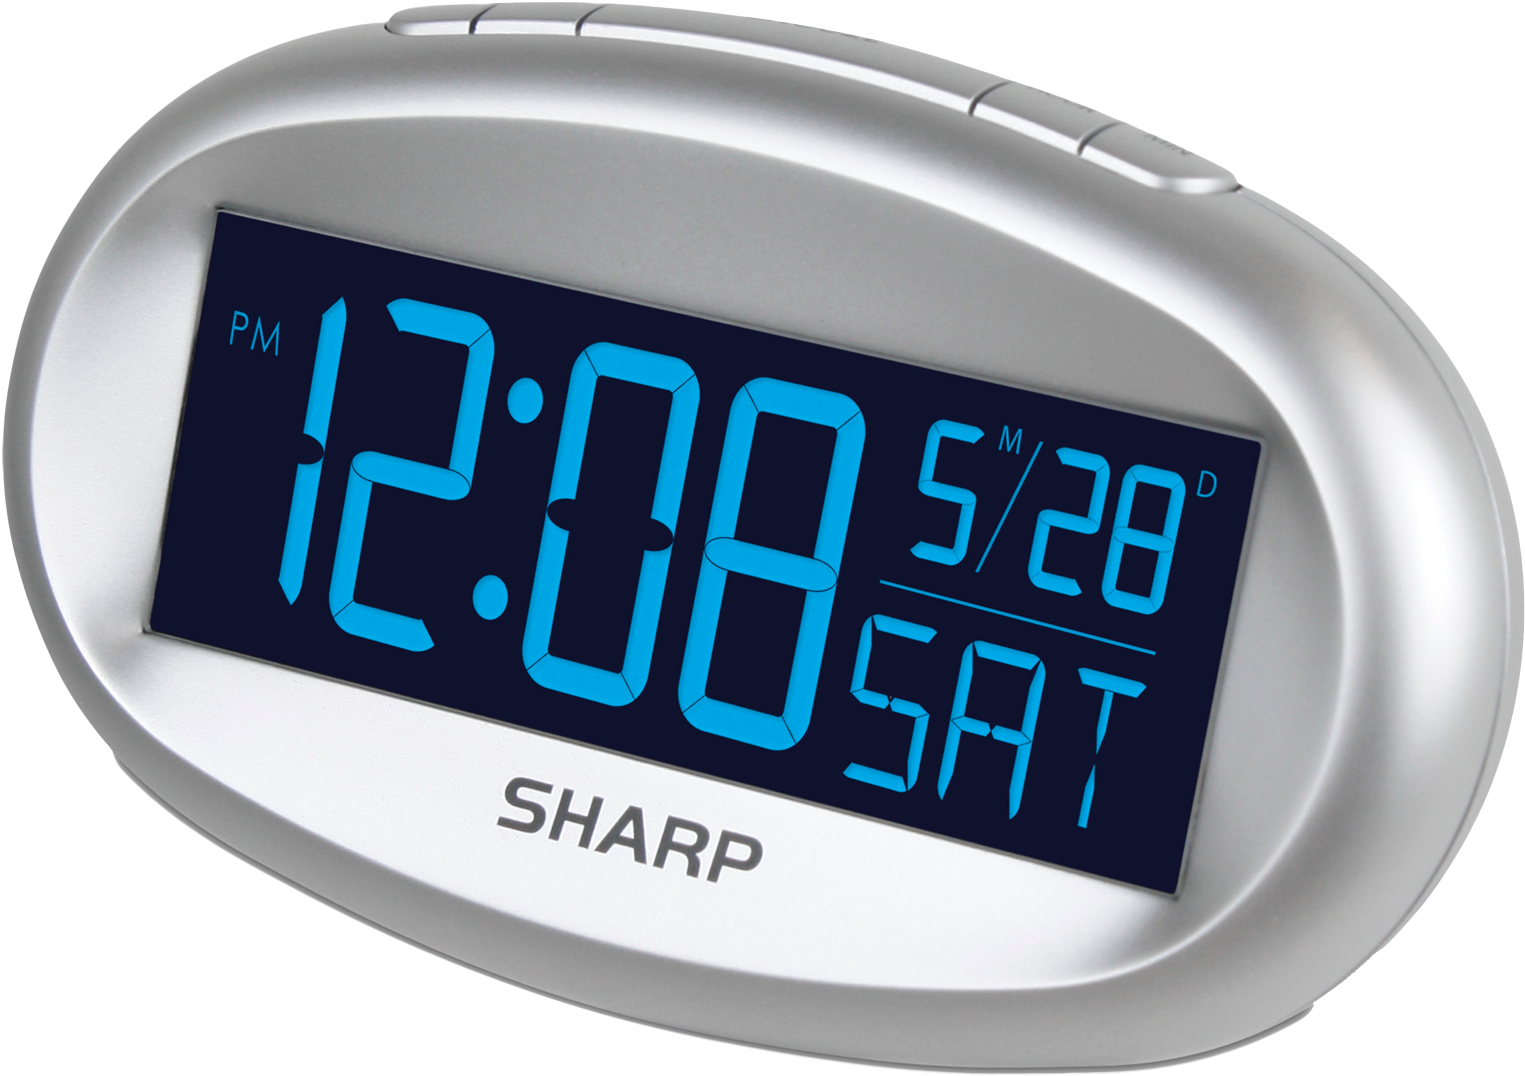 Digital Alarm Clock Png Image - Digital Alarm Clock Png (1665x1193), Png Download